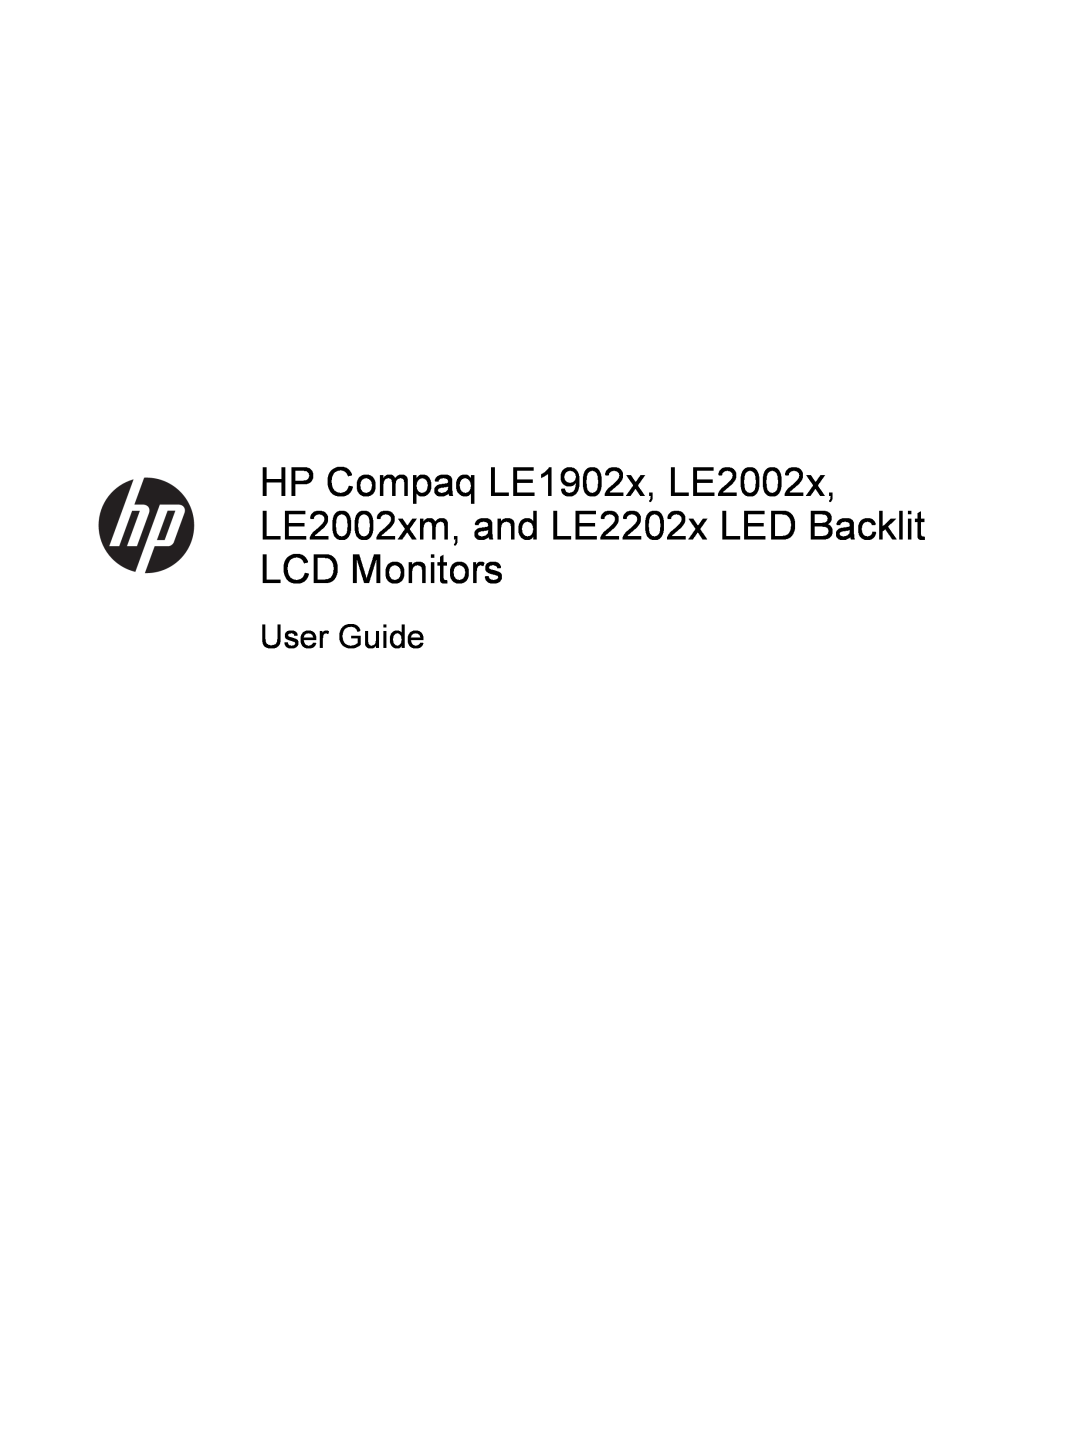 HP LE2002XM, LE1902X manual HP Compaq LE1902x, LE2002x LE2002xm, and LE2202x LED Backlit, LCD Monitors, User Guide 